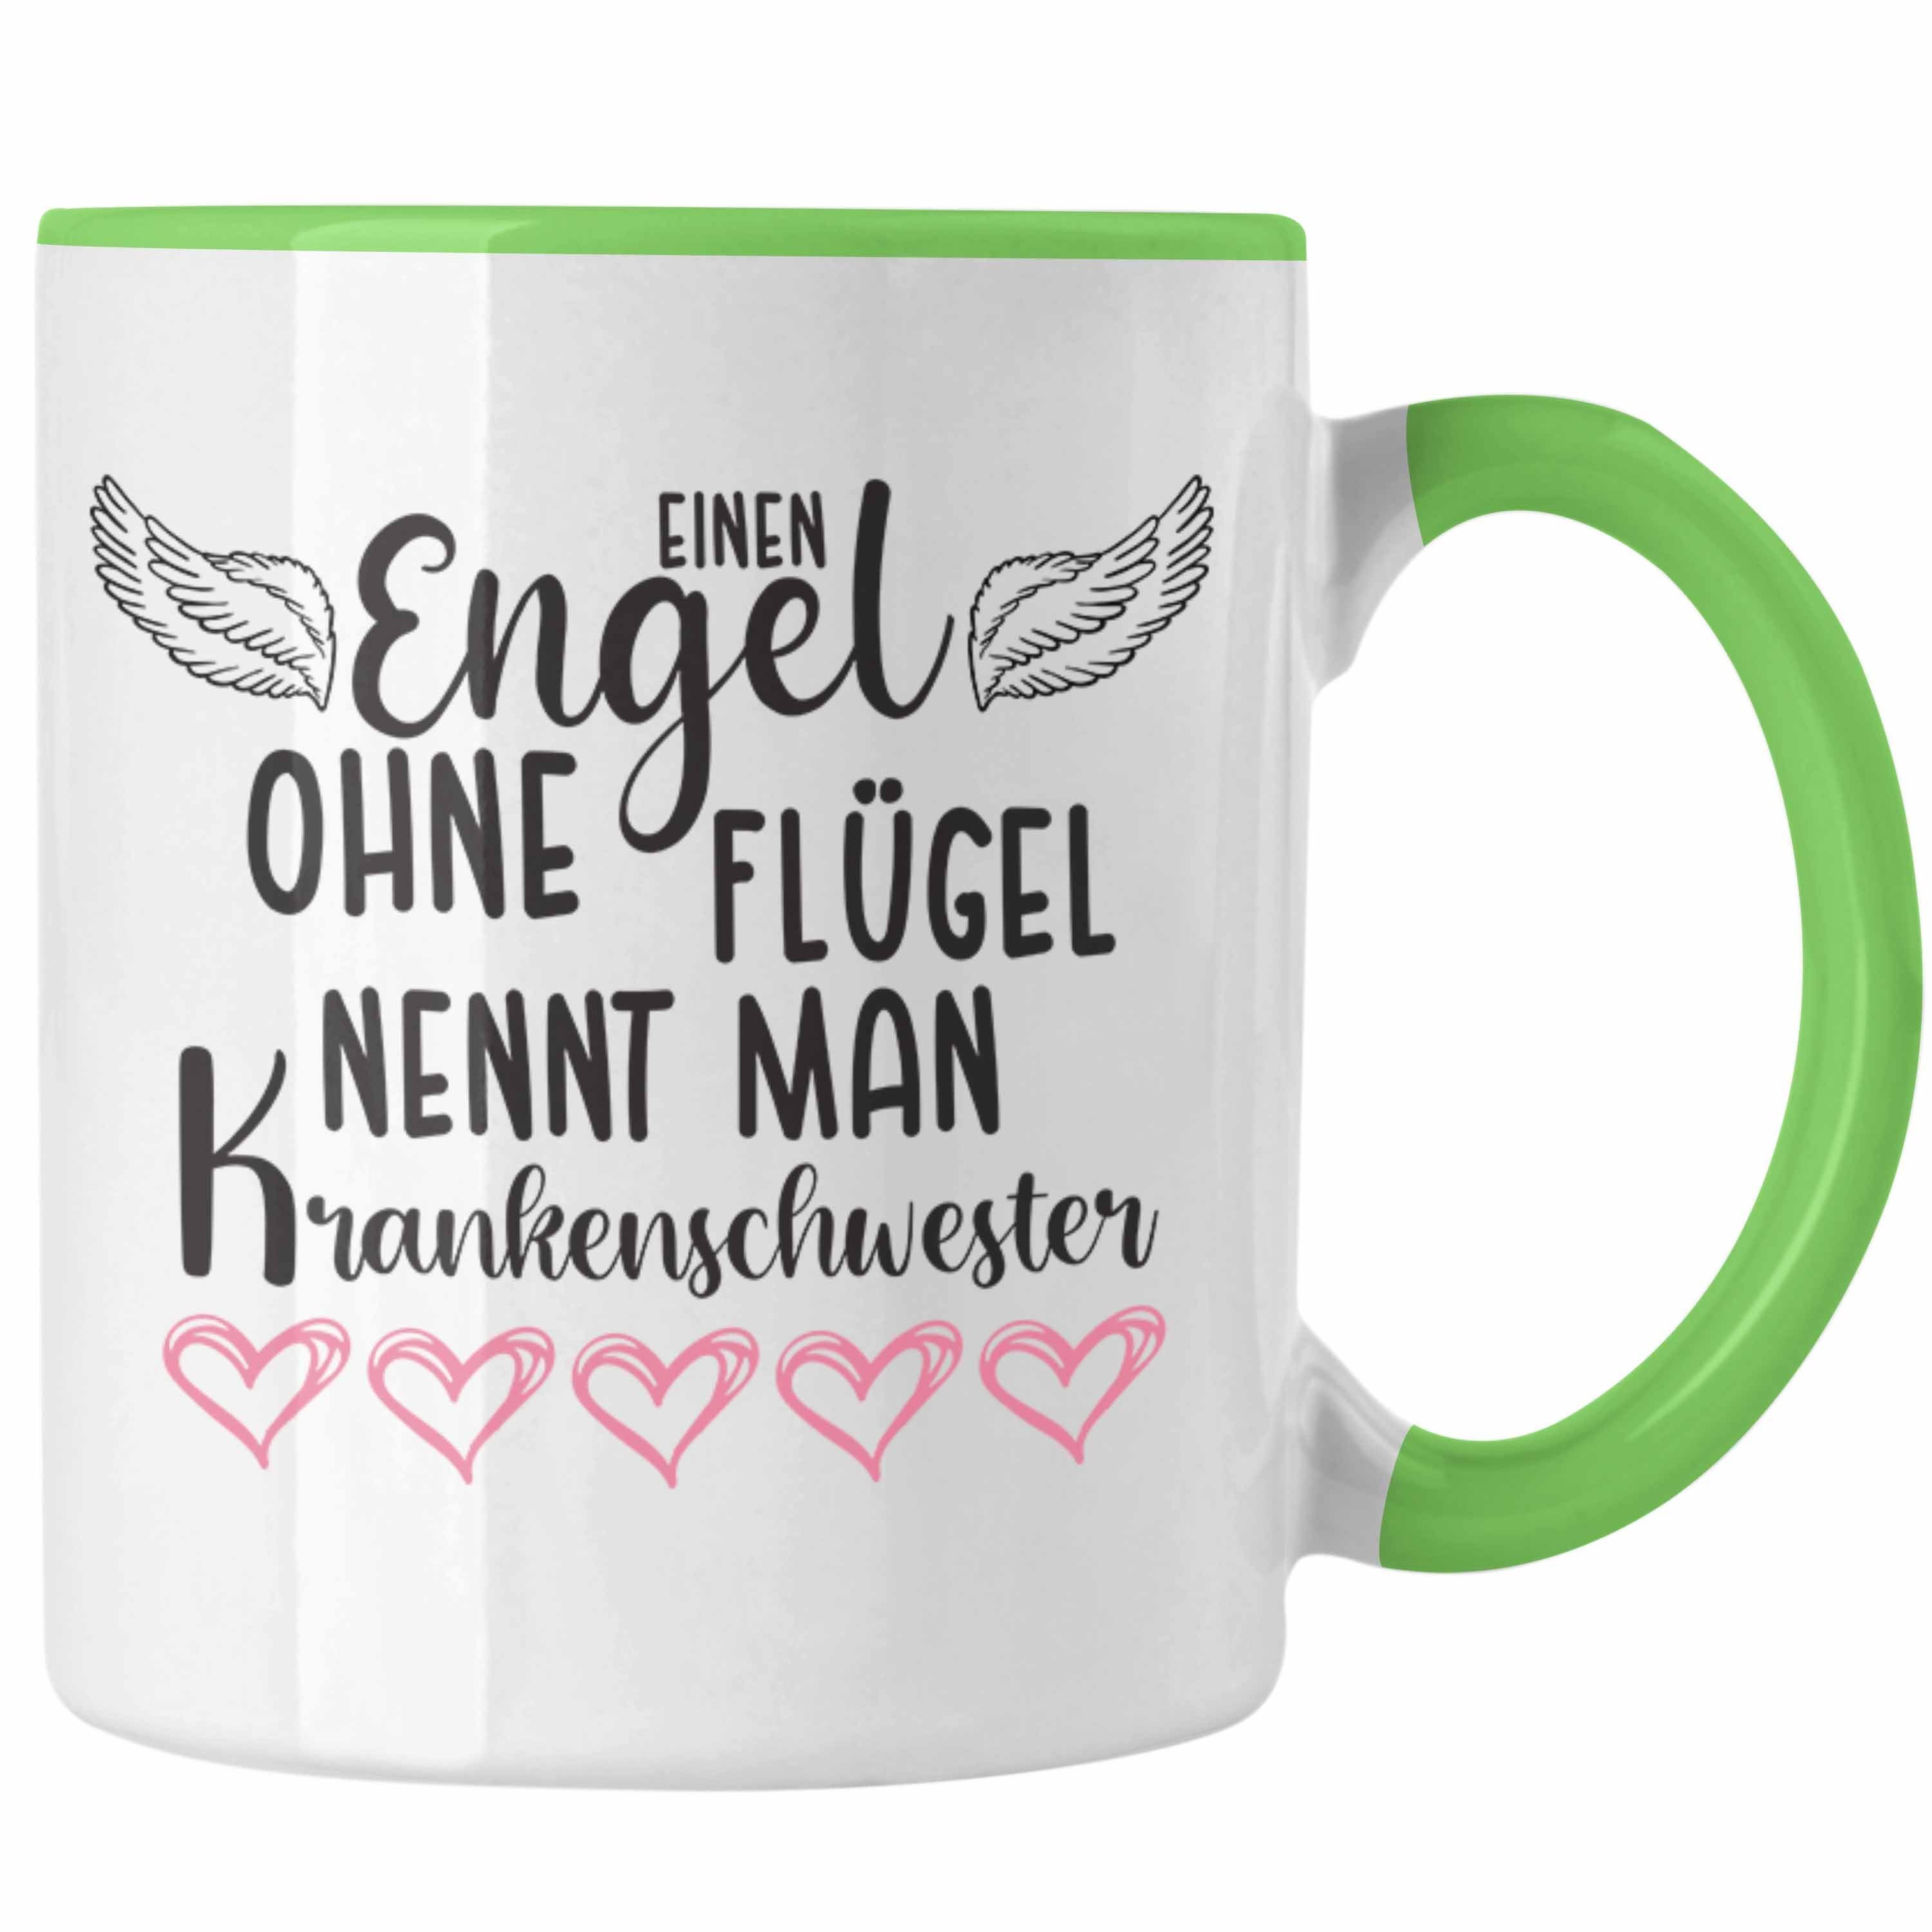 Dankeschön Lustig Tasse Krankenschwester Grün Krankenschwestern - Spruch Trendation Trendation Tasse Geschenk Geschenke